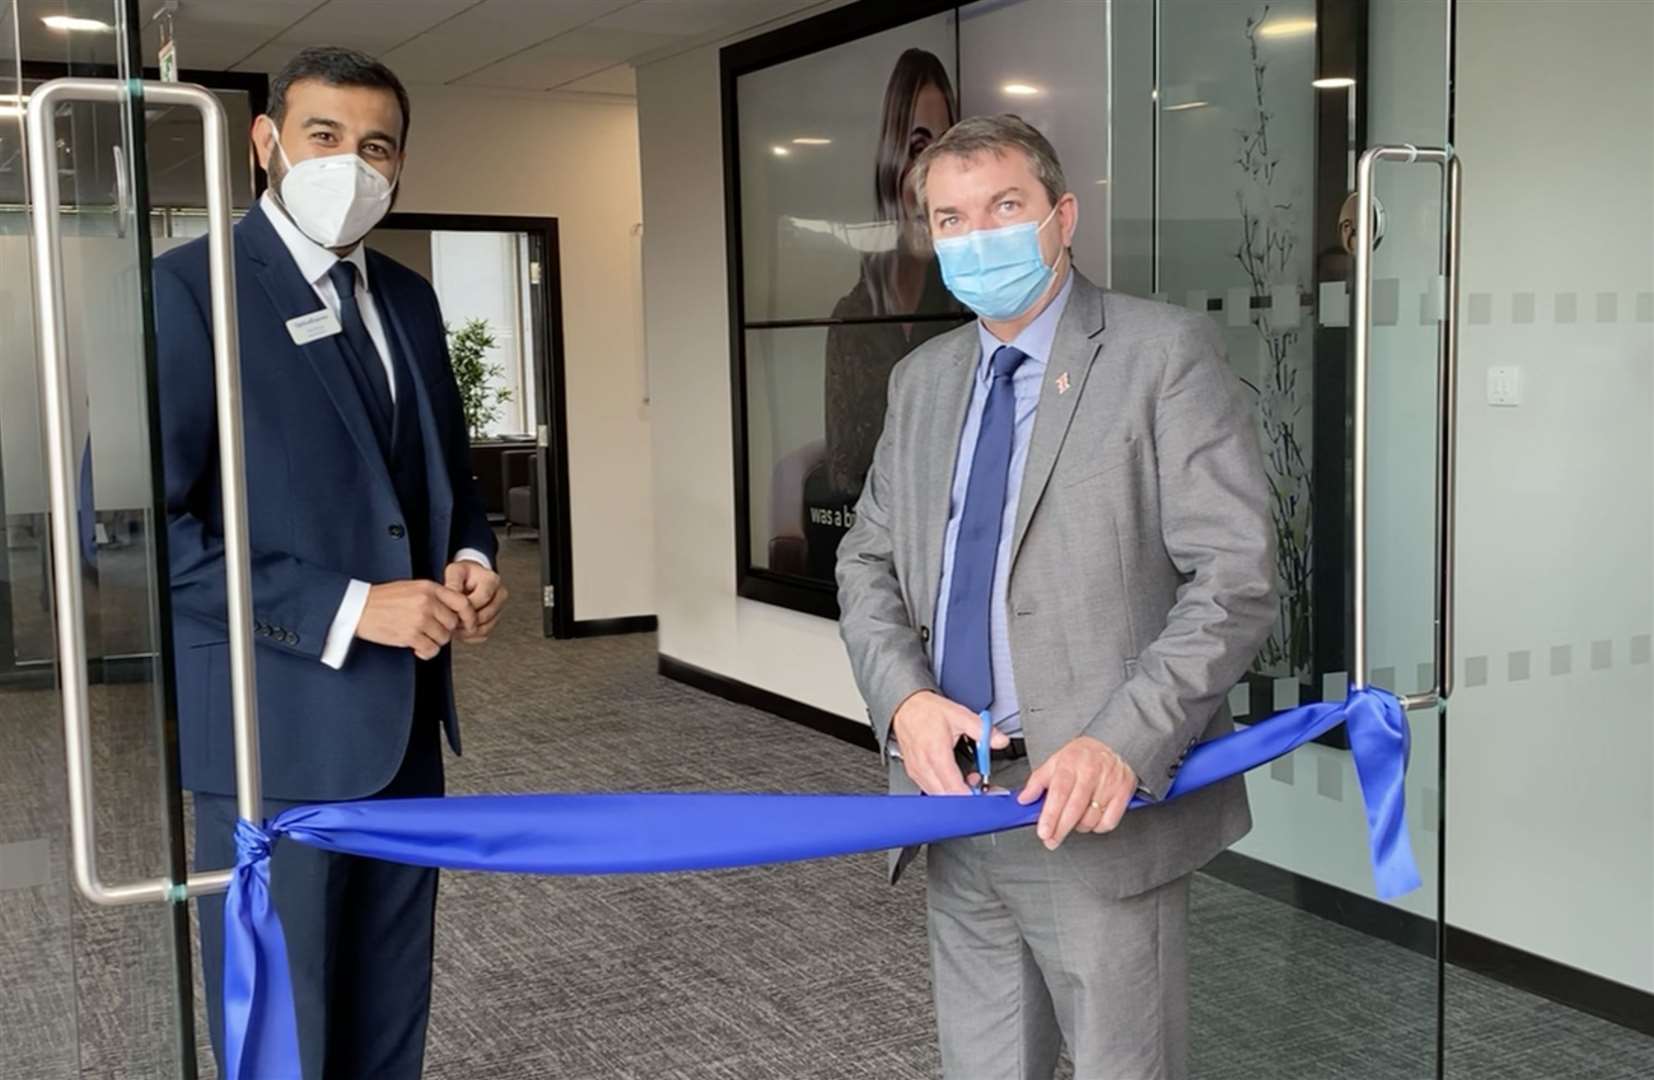 MP Gareth Johnson opens the new eye clinic